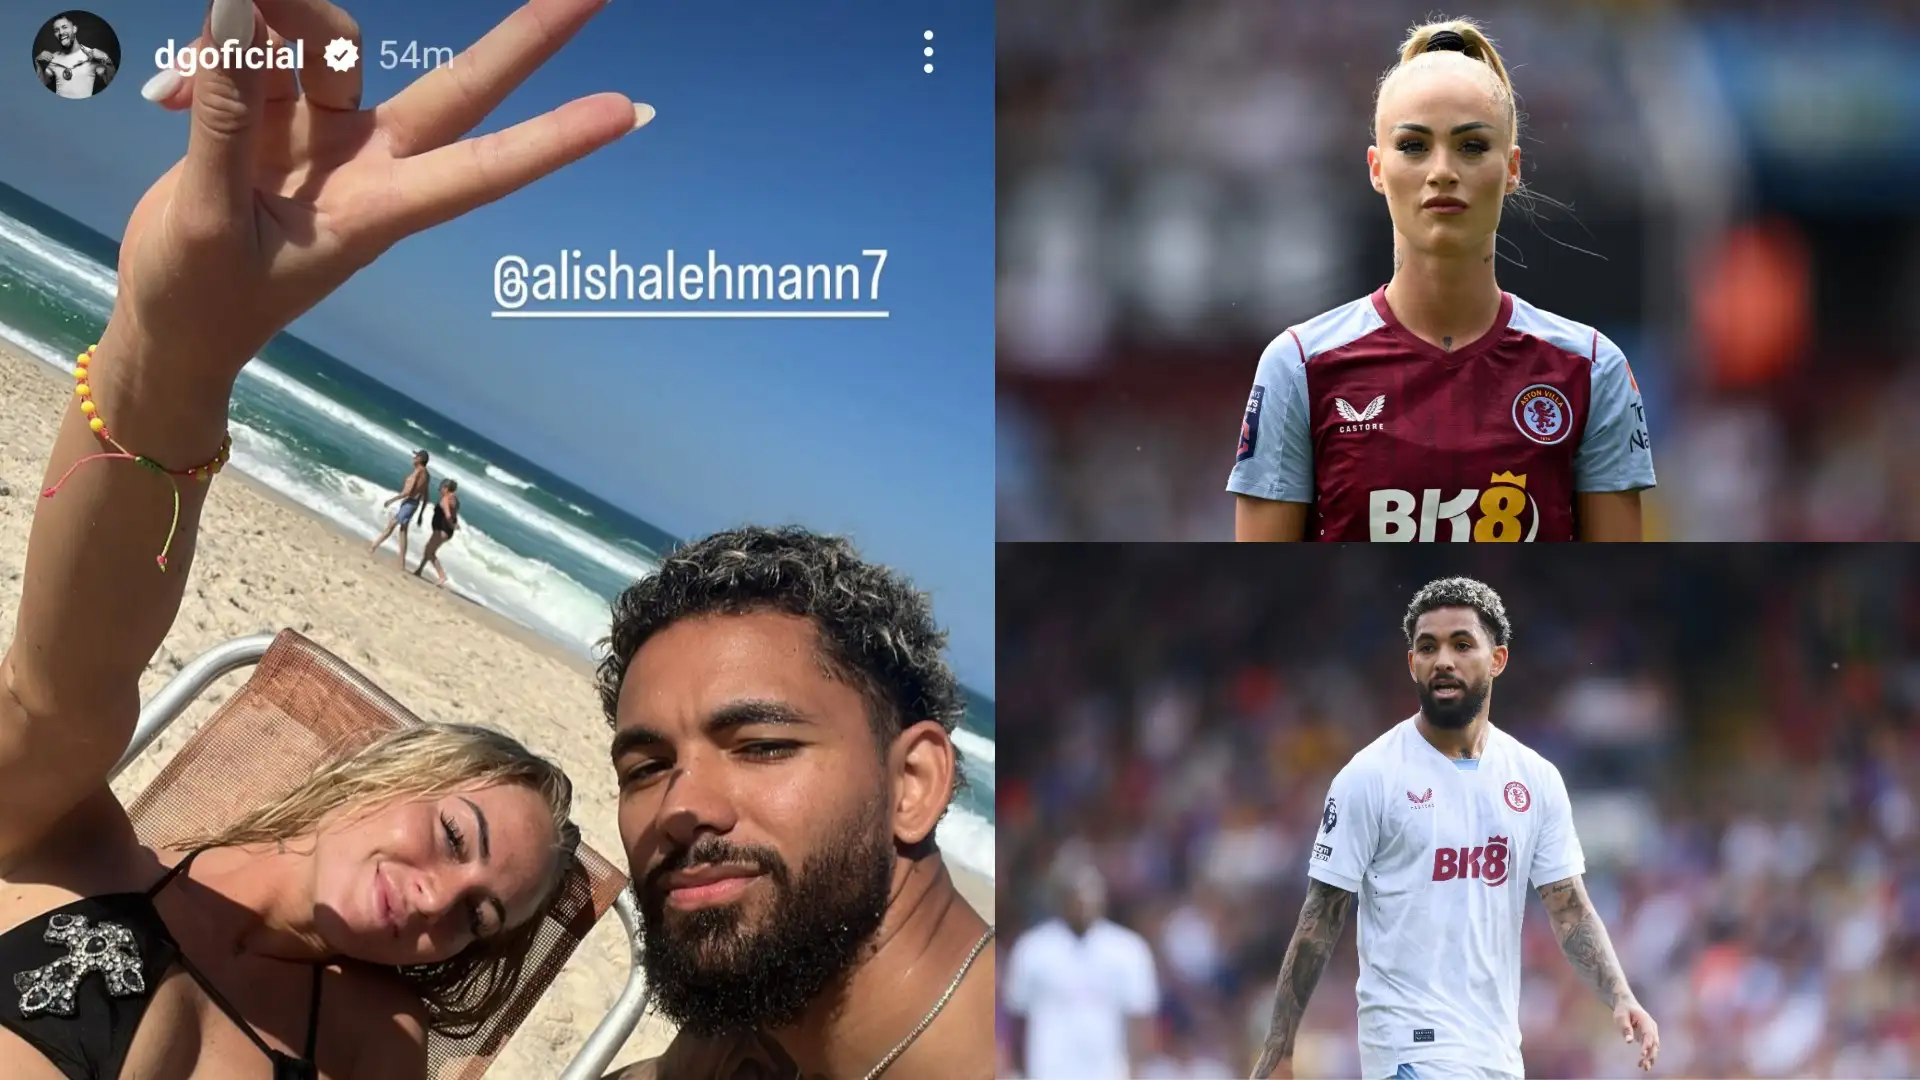 'Recharge' - Alisha Lehmann enjoys holiday beach day with boyfriend and fellow Aston Villa star Douglas Luiz after end of WSL season